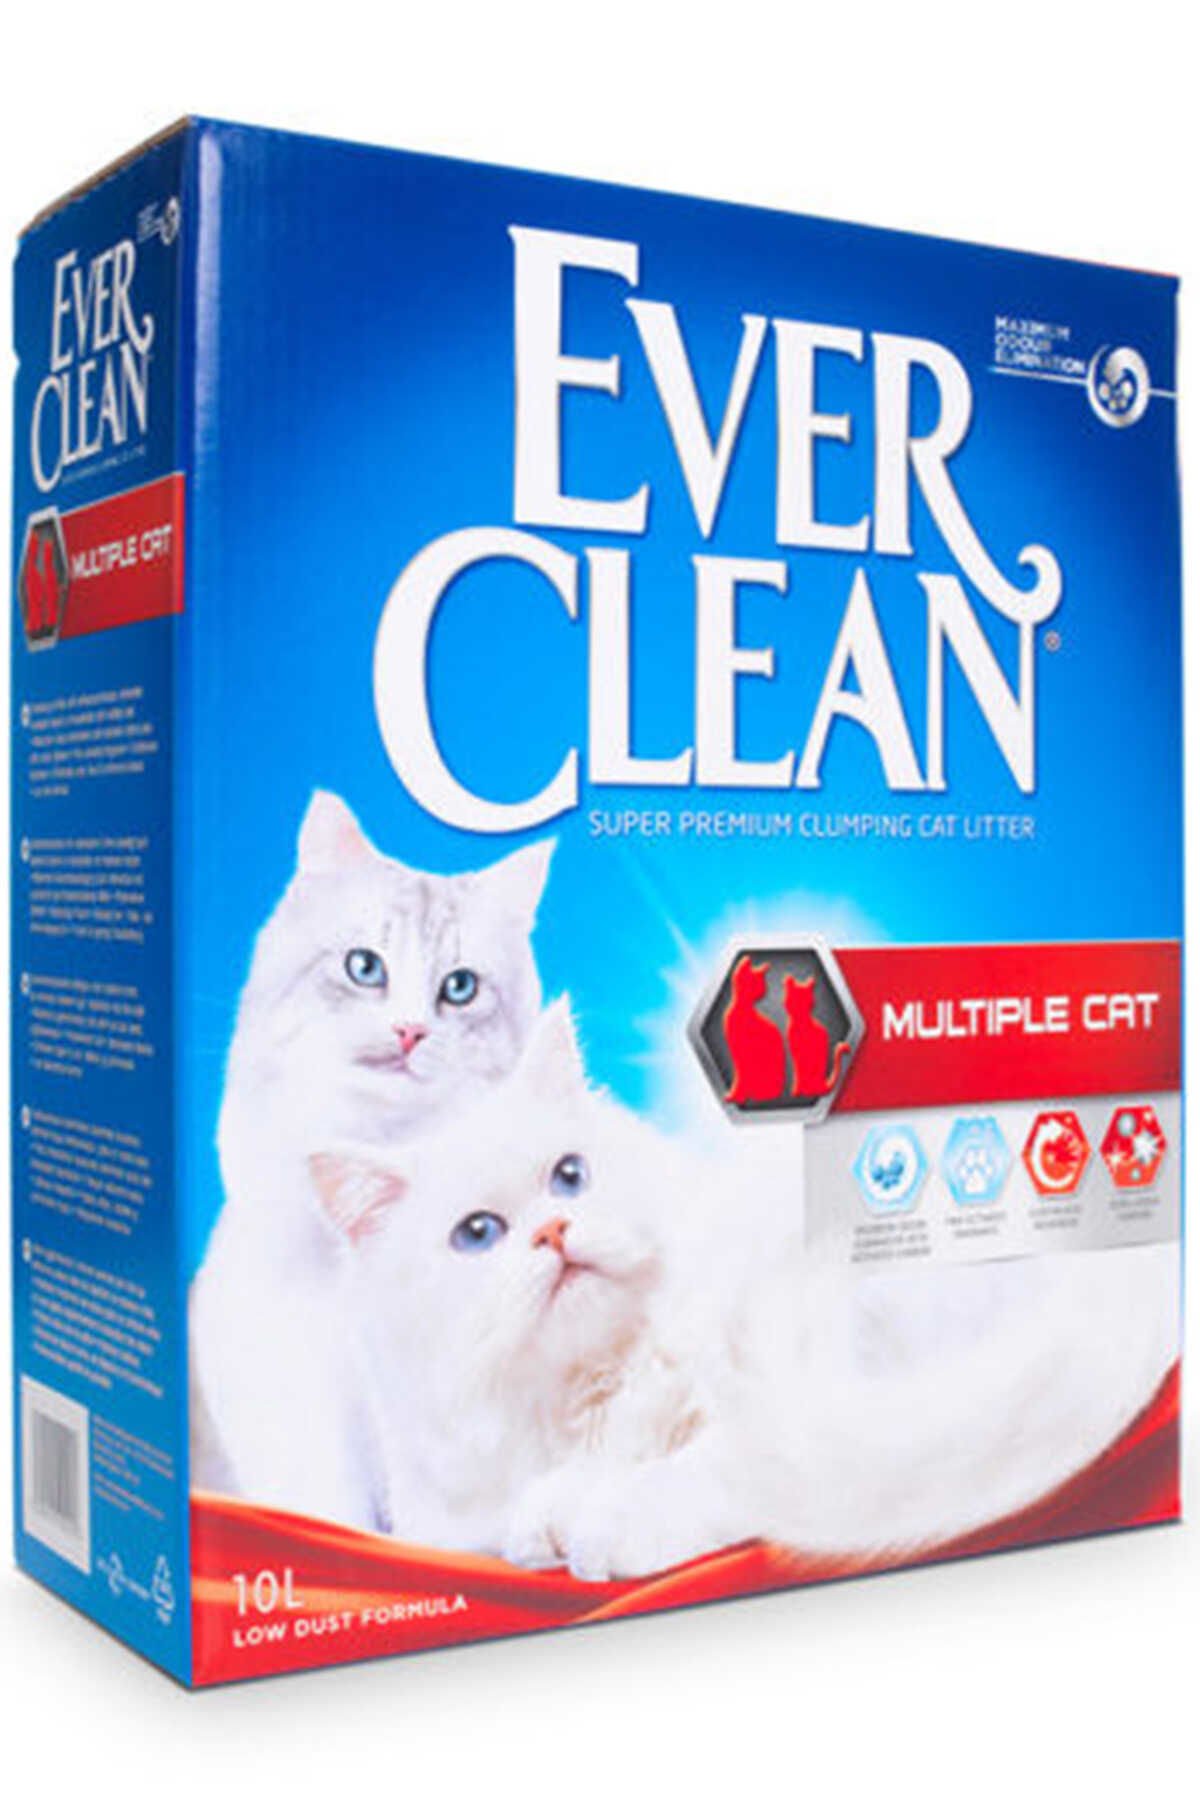 Ever Clean Multiple Cat Kedi Kumu 10 litre